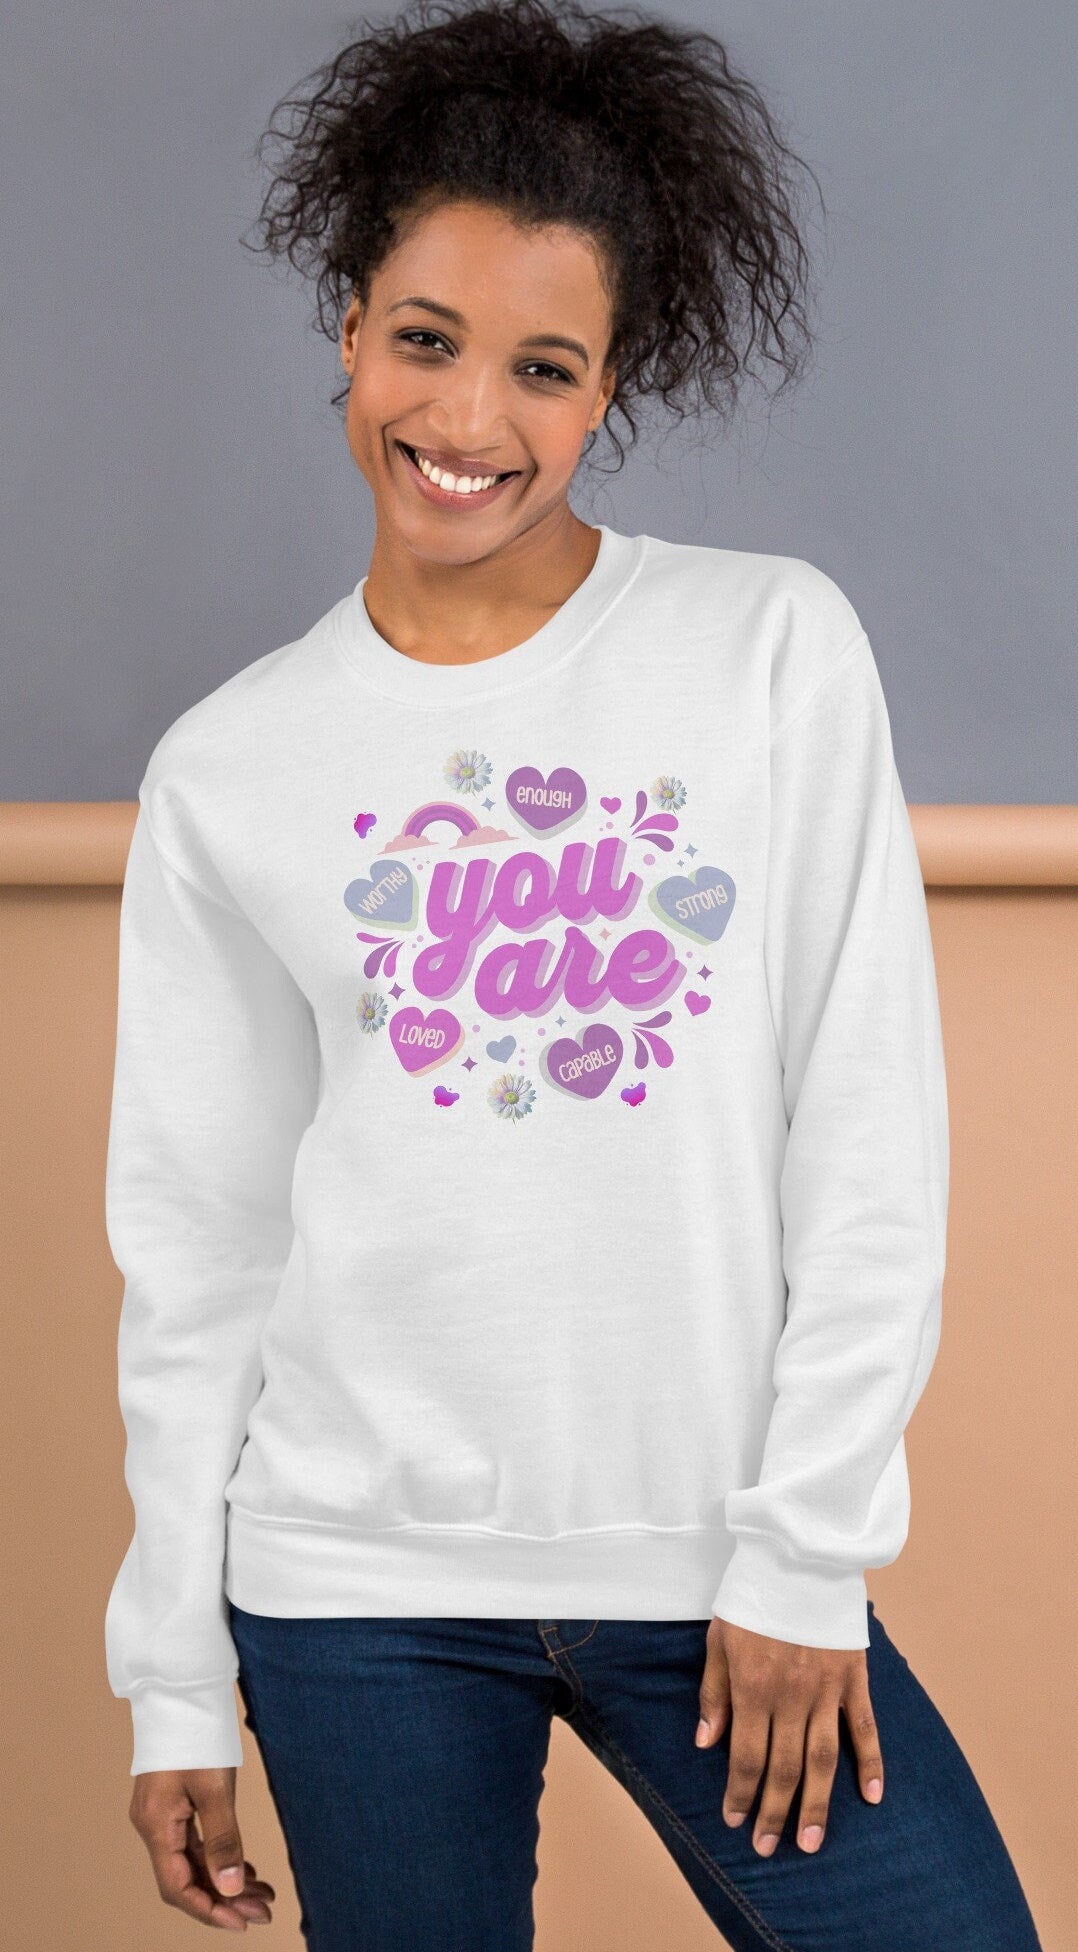 Valentine Sweatshirt, You are loved Sweater